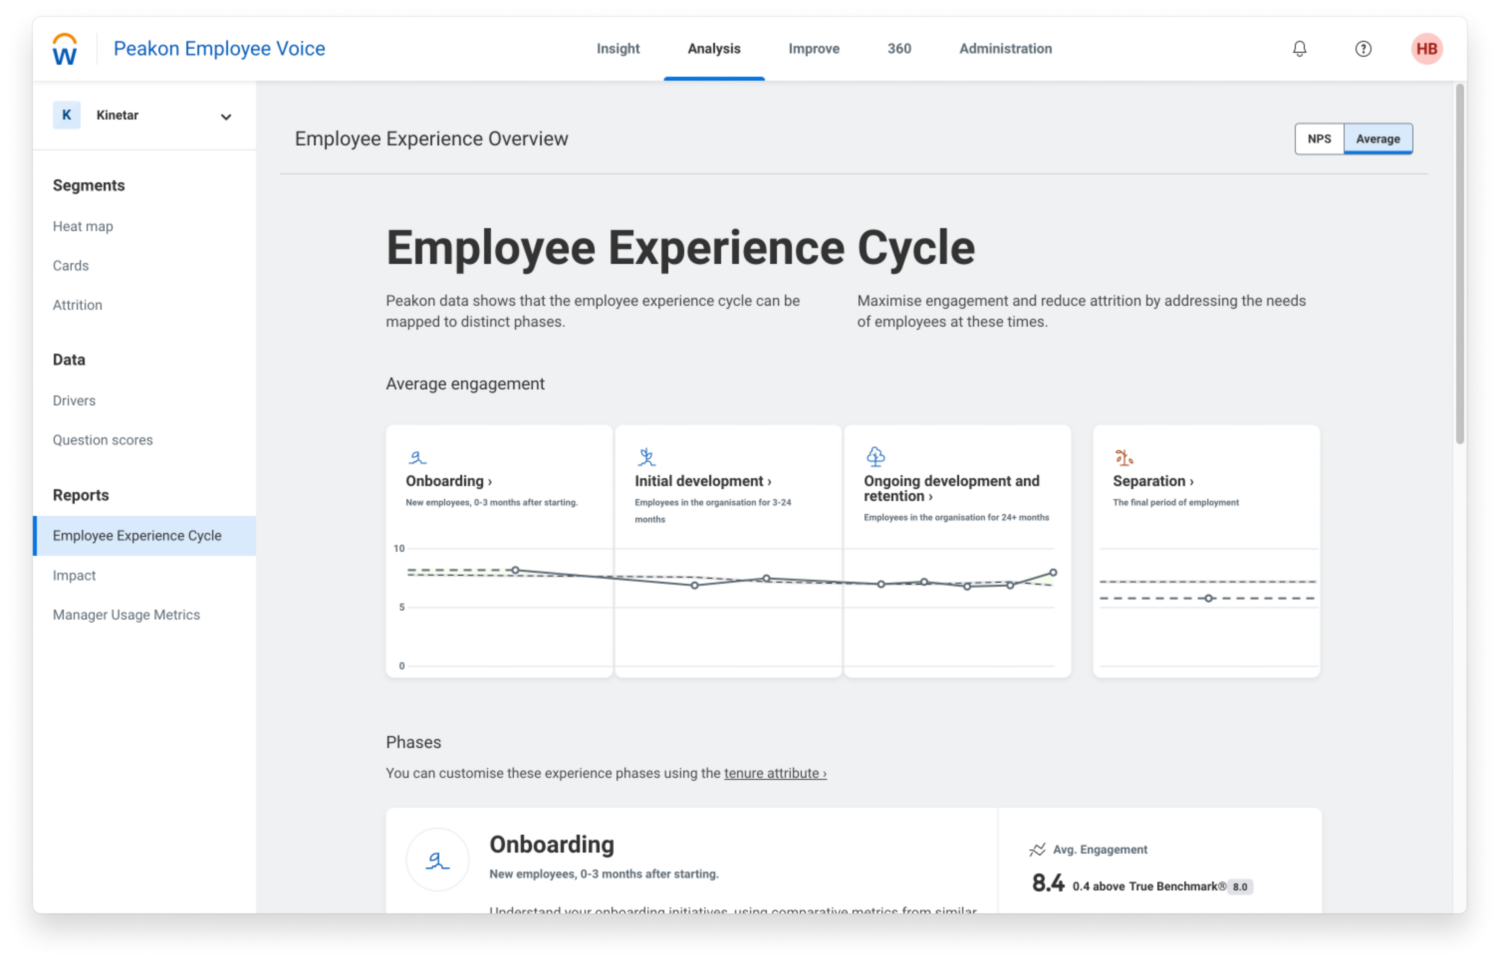 Dashboard di Workday Peakon Employee Voice che mostra le metriche di engagement per il ciclo dell'employee experience.